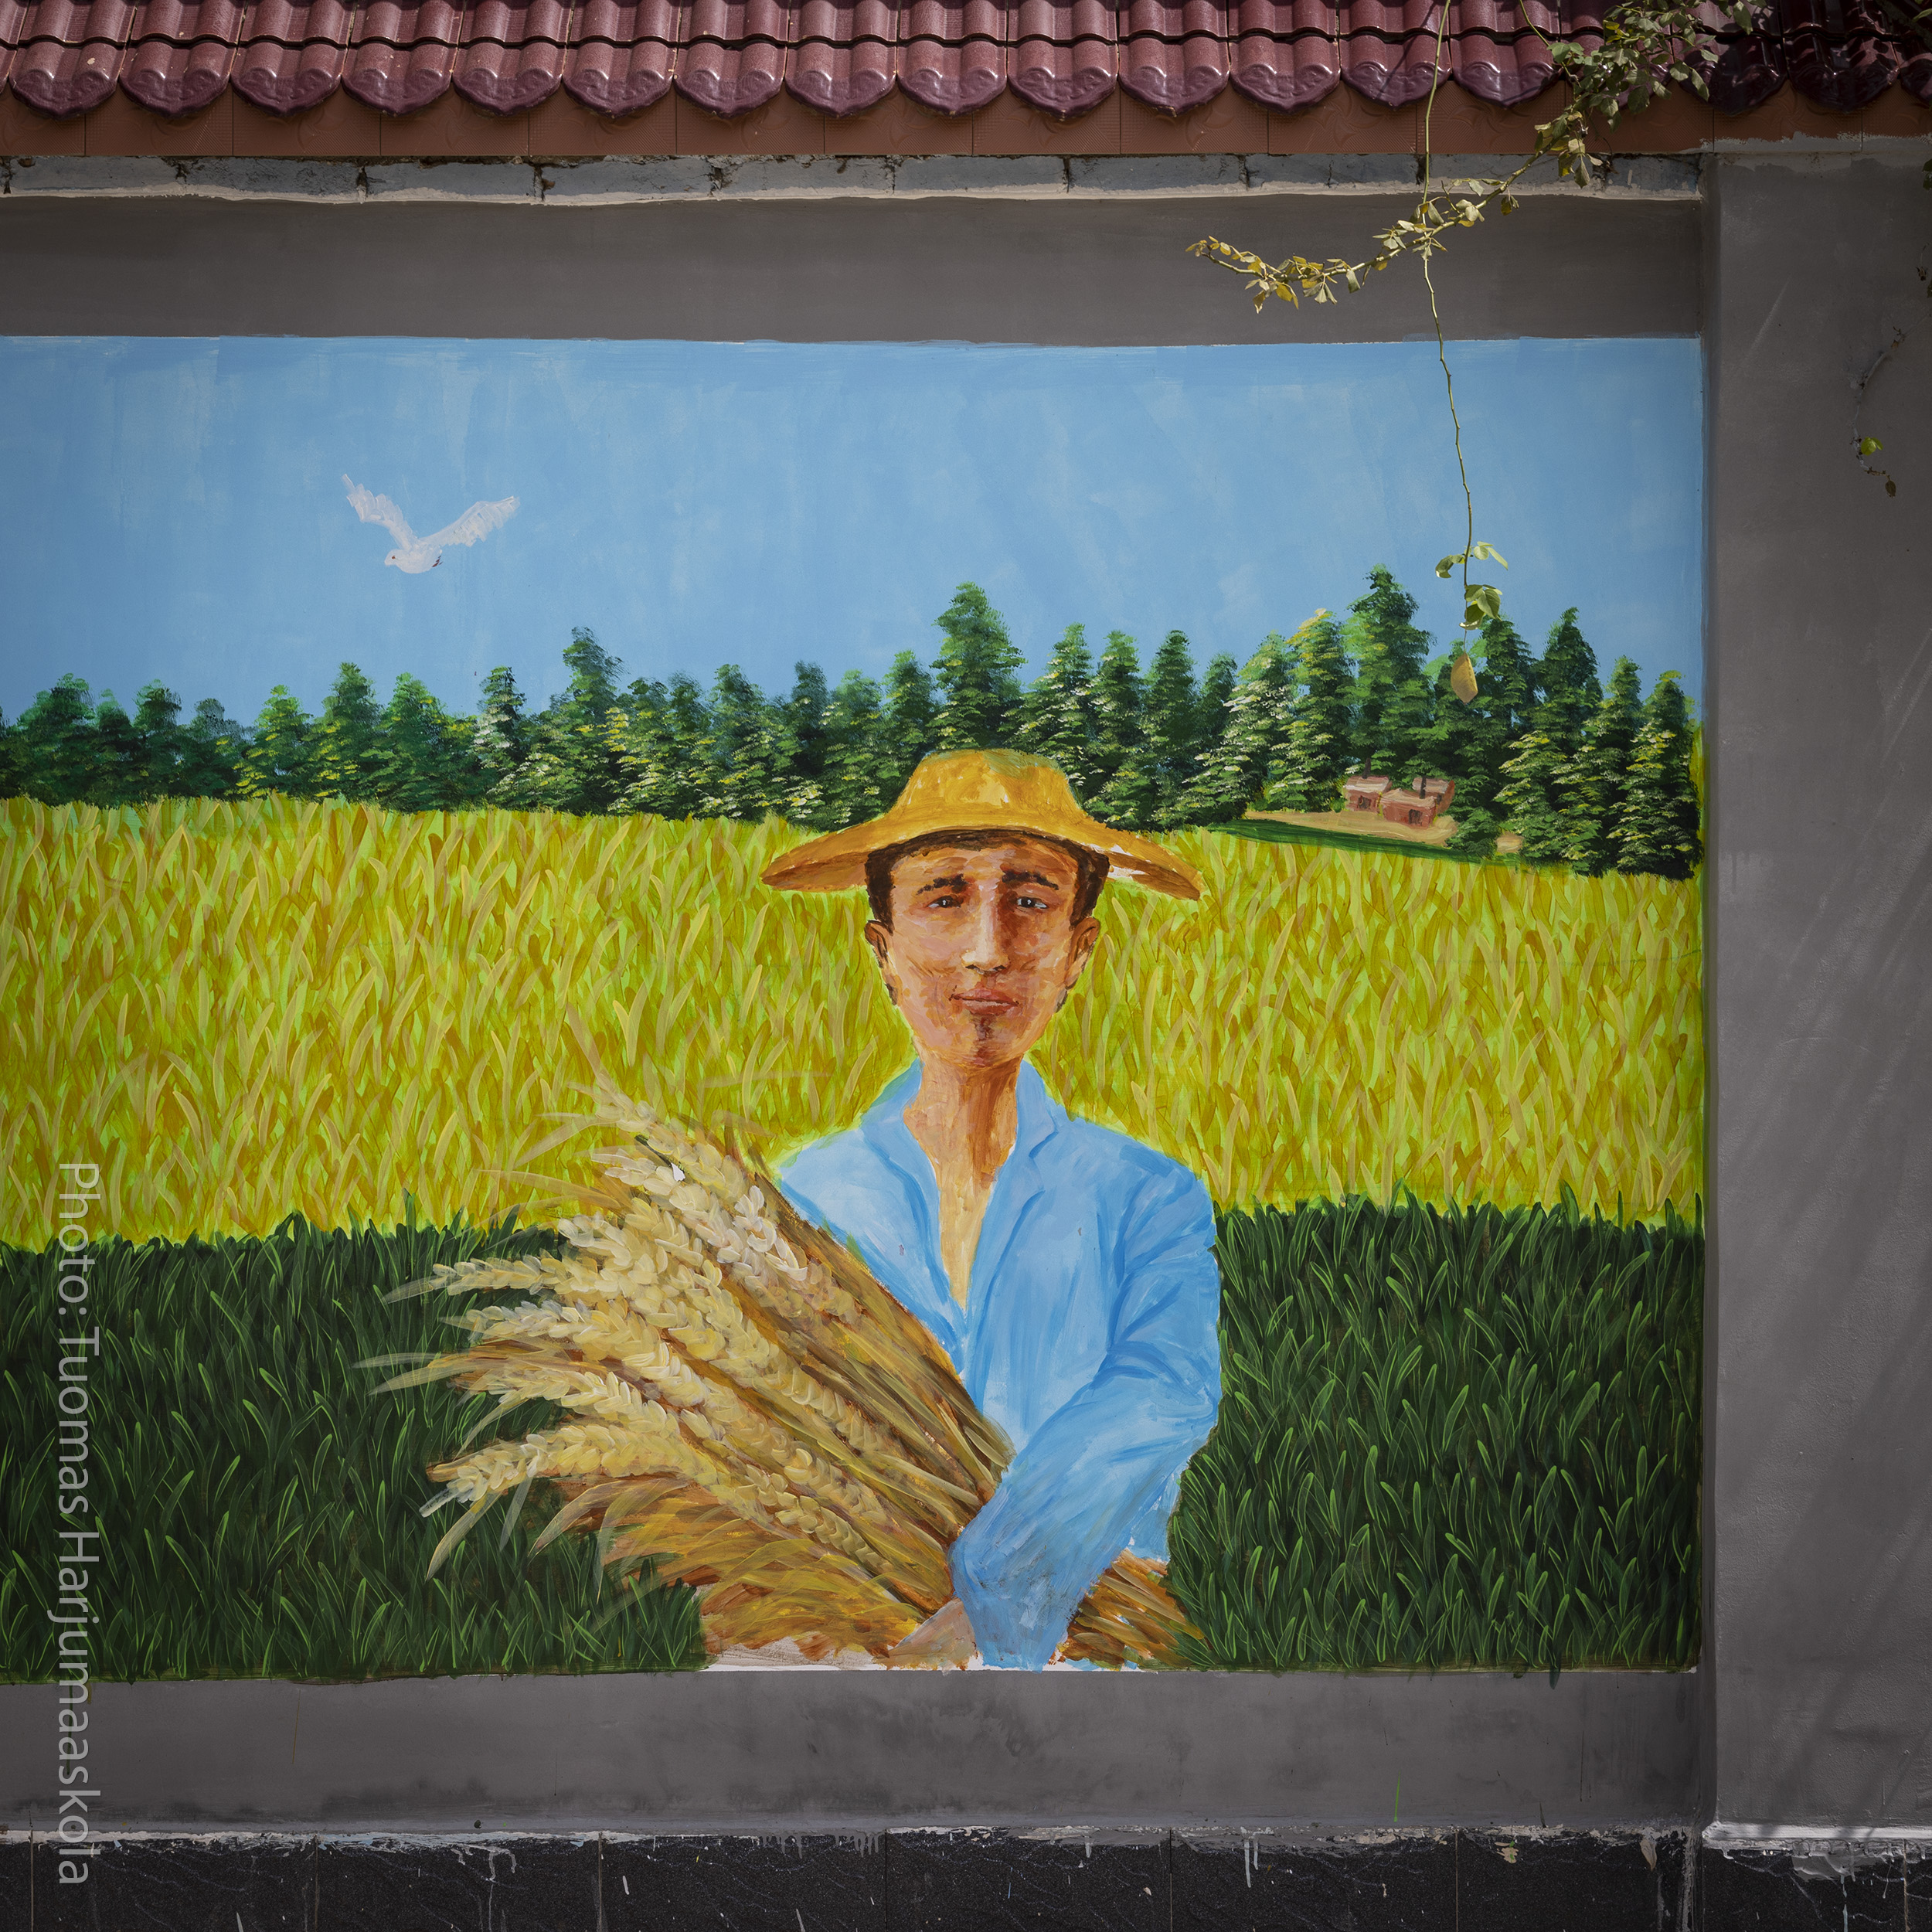 Chinese wall painting, wall art, a painted farmer holding crops. Photographer Tuomas Harjumaaskola.